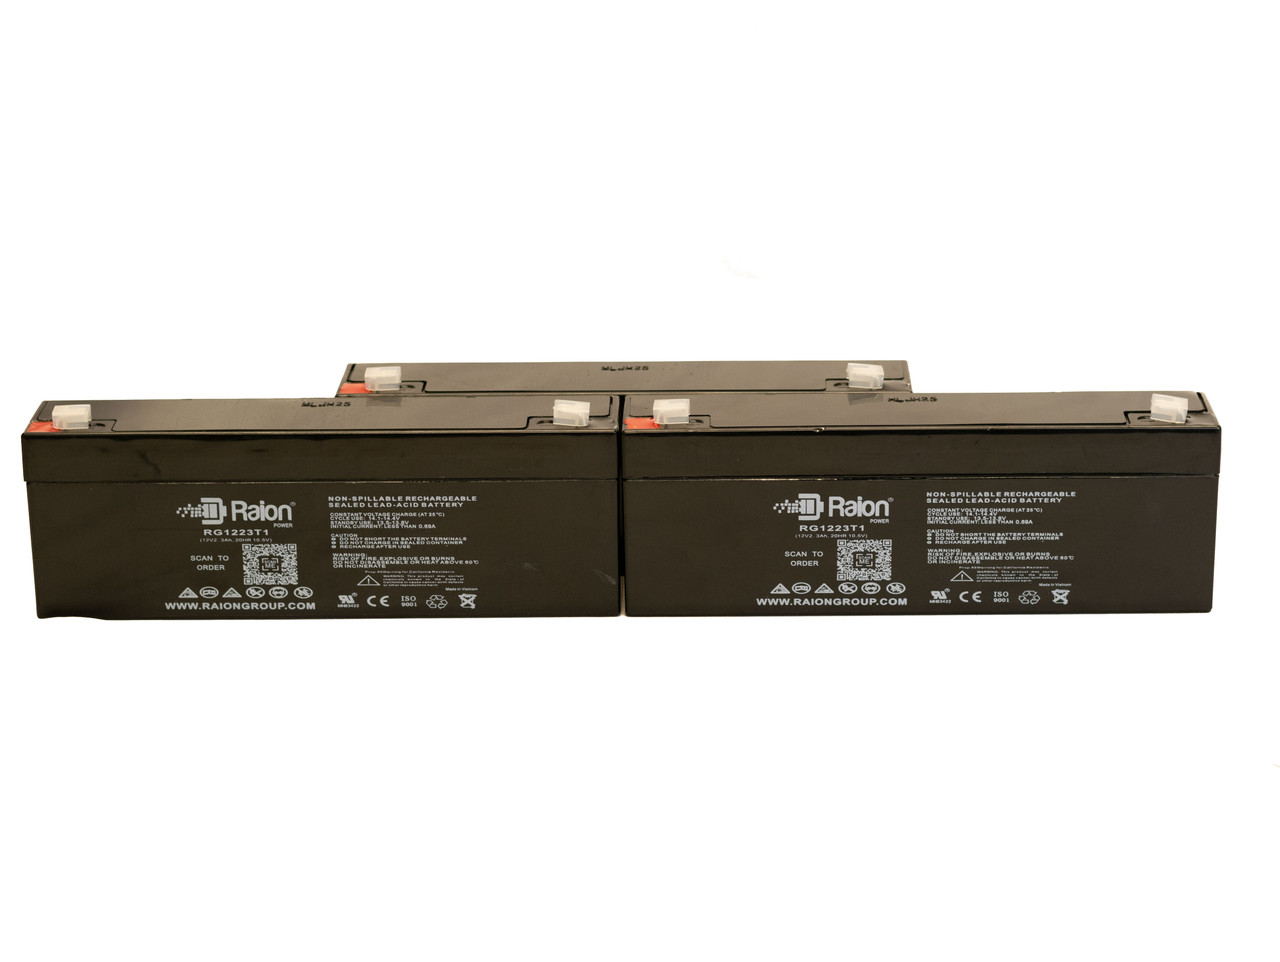 Raion Power 12V 2.3Ah RG1223T1 Replacement Medical Battery for BioTek Instruments SPO Simulator 2 - 3 Pack